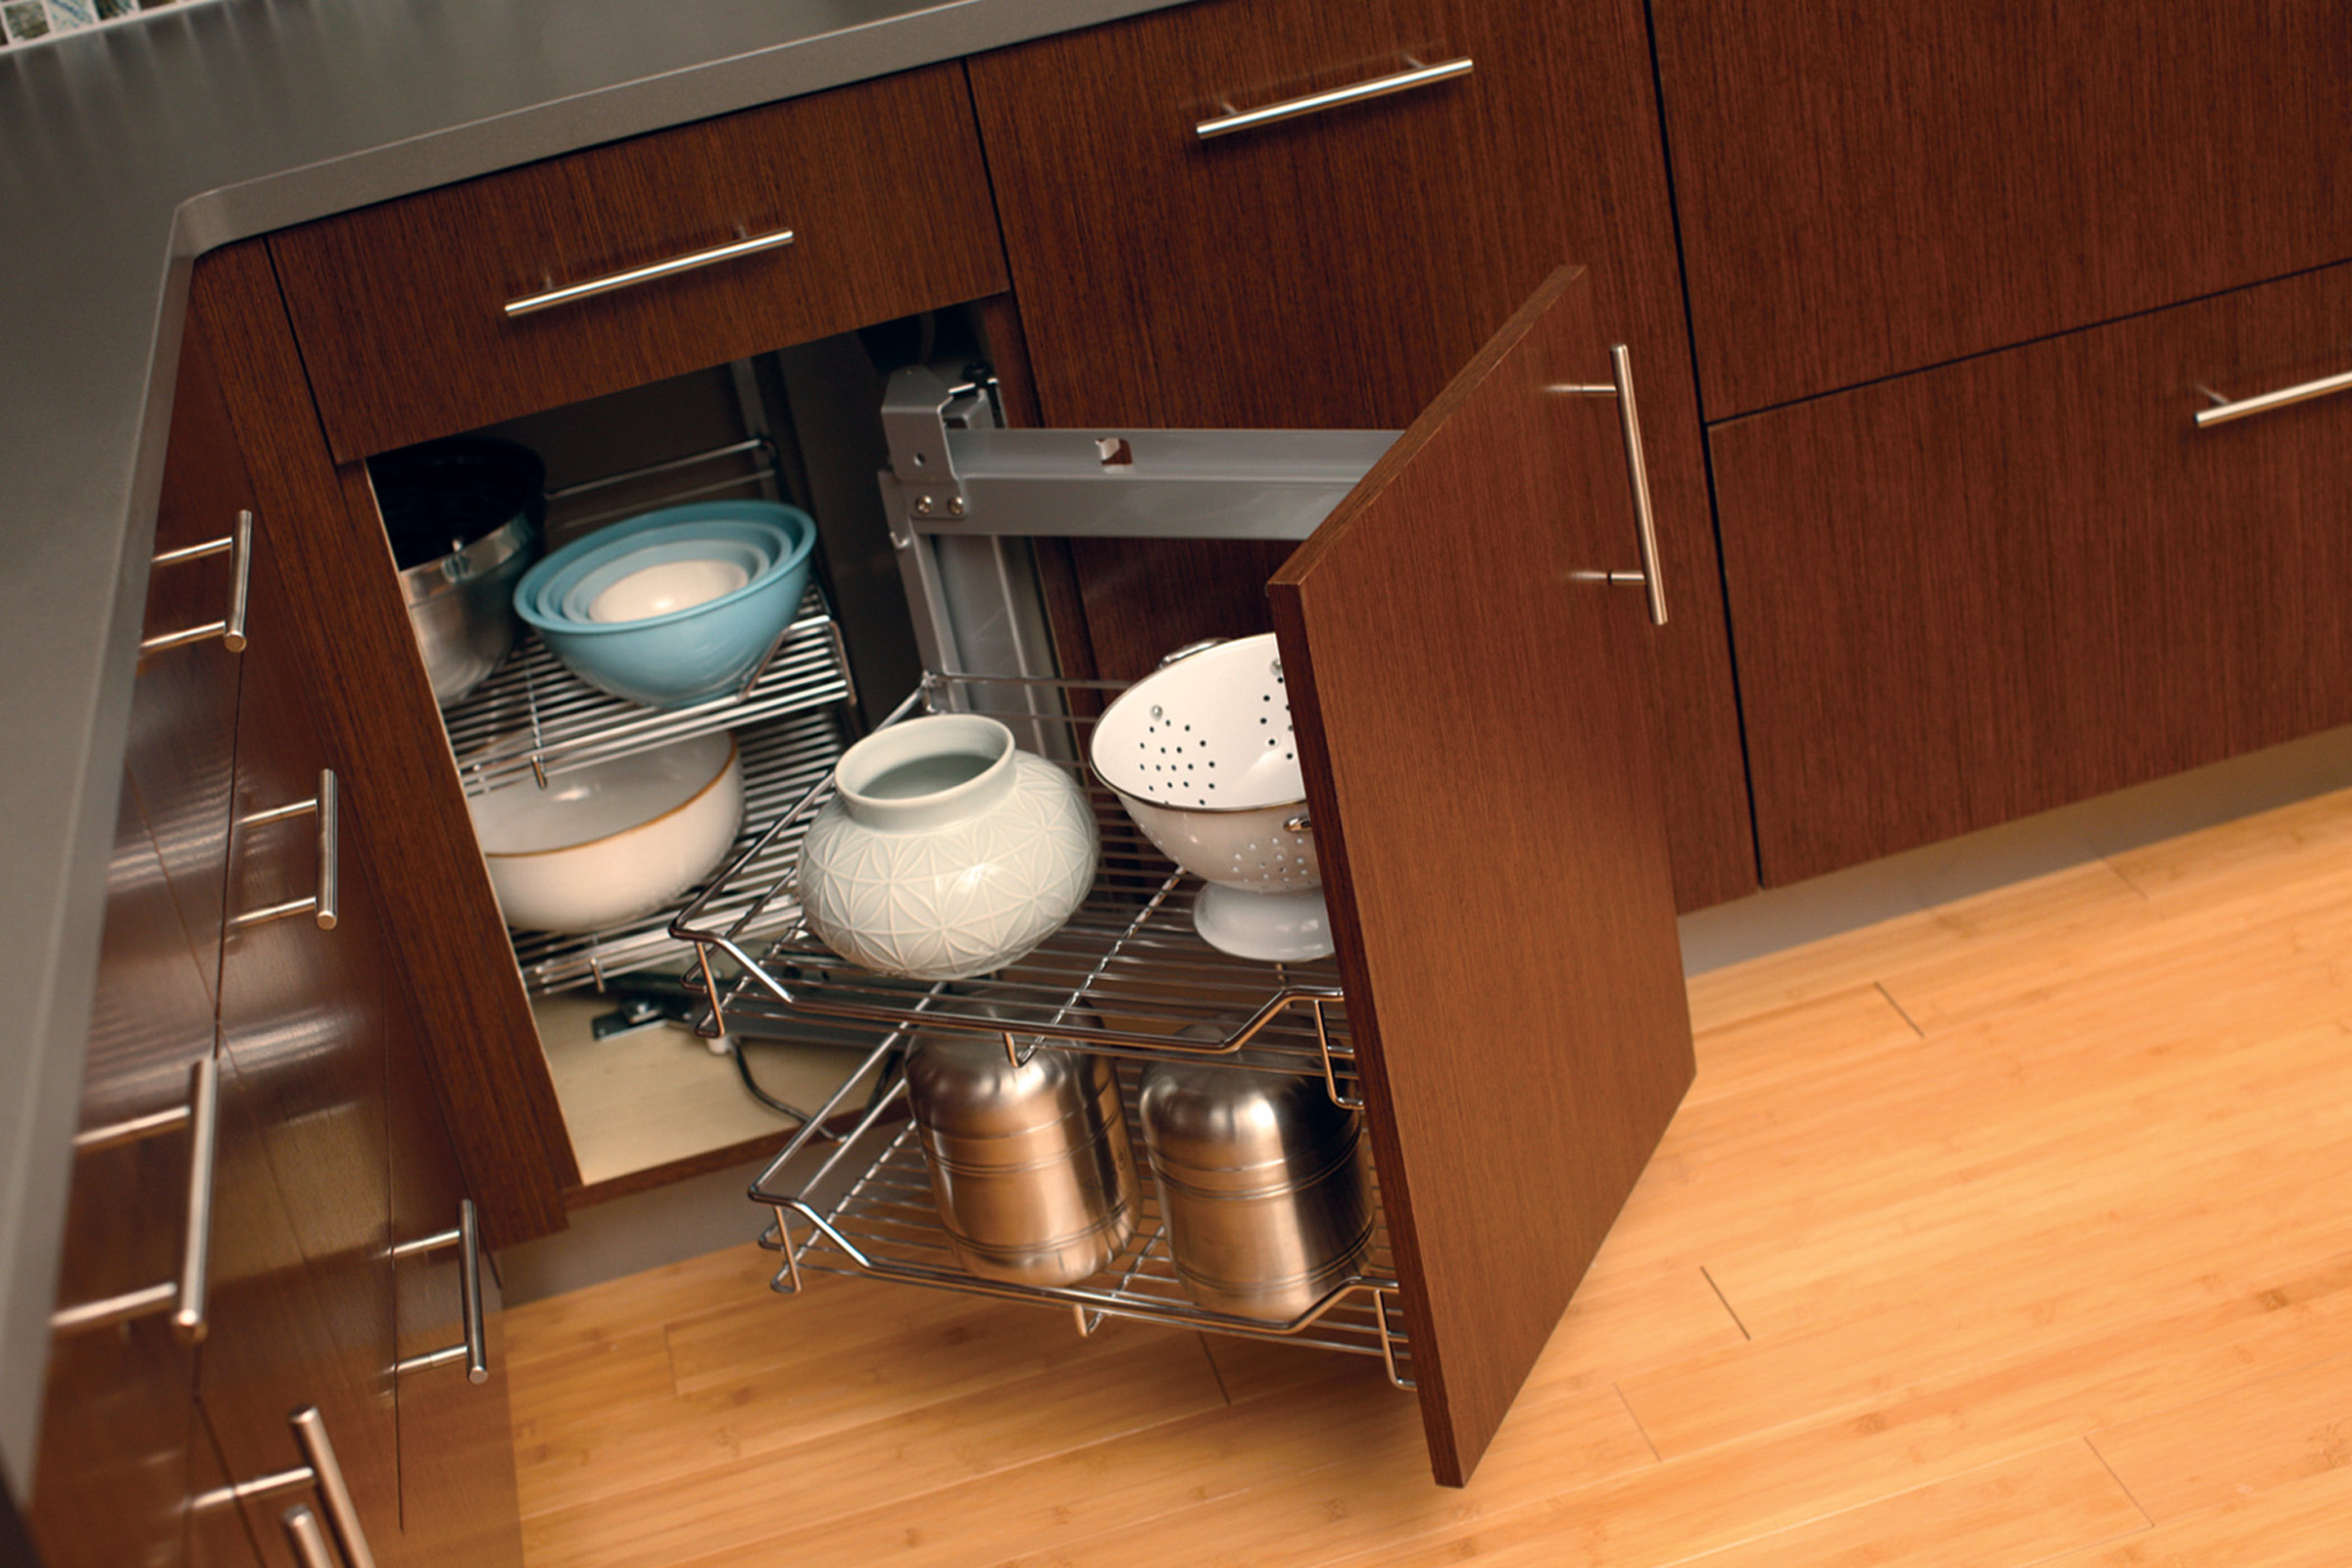 Corner Base Cabinets That Maximize Your, Lower Corner Kitchen Cabinet Design